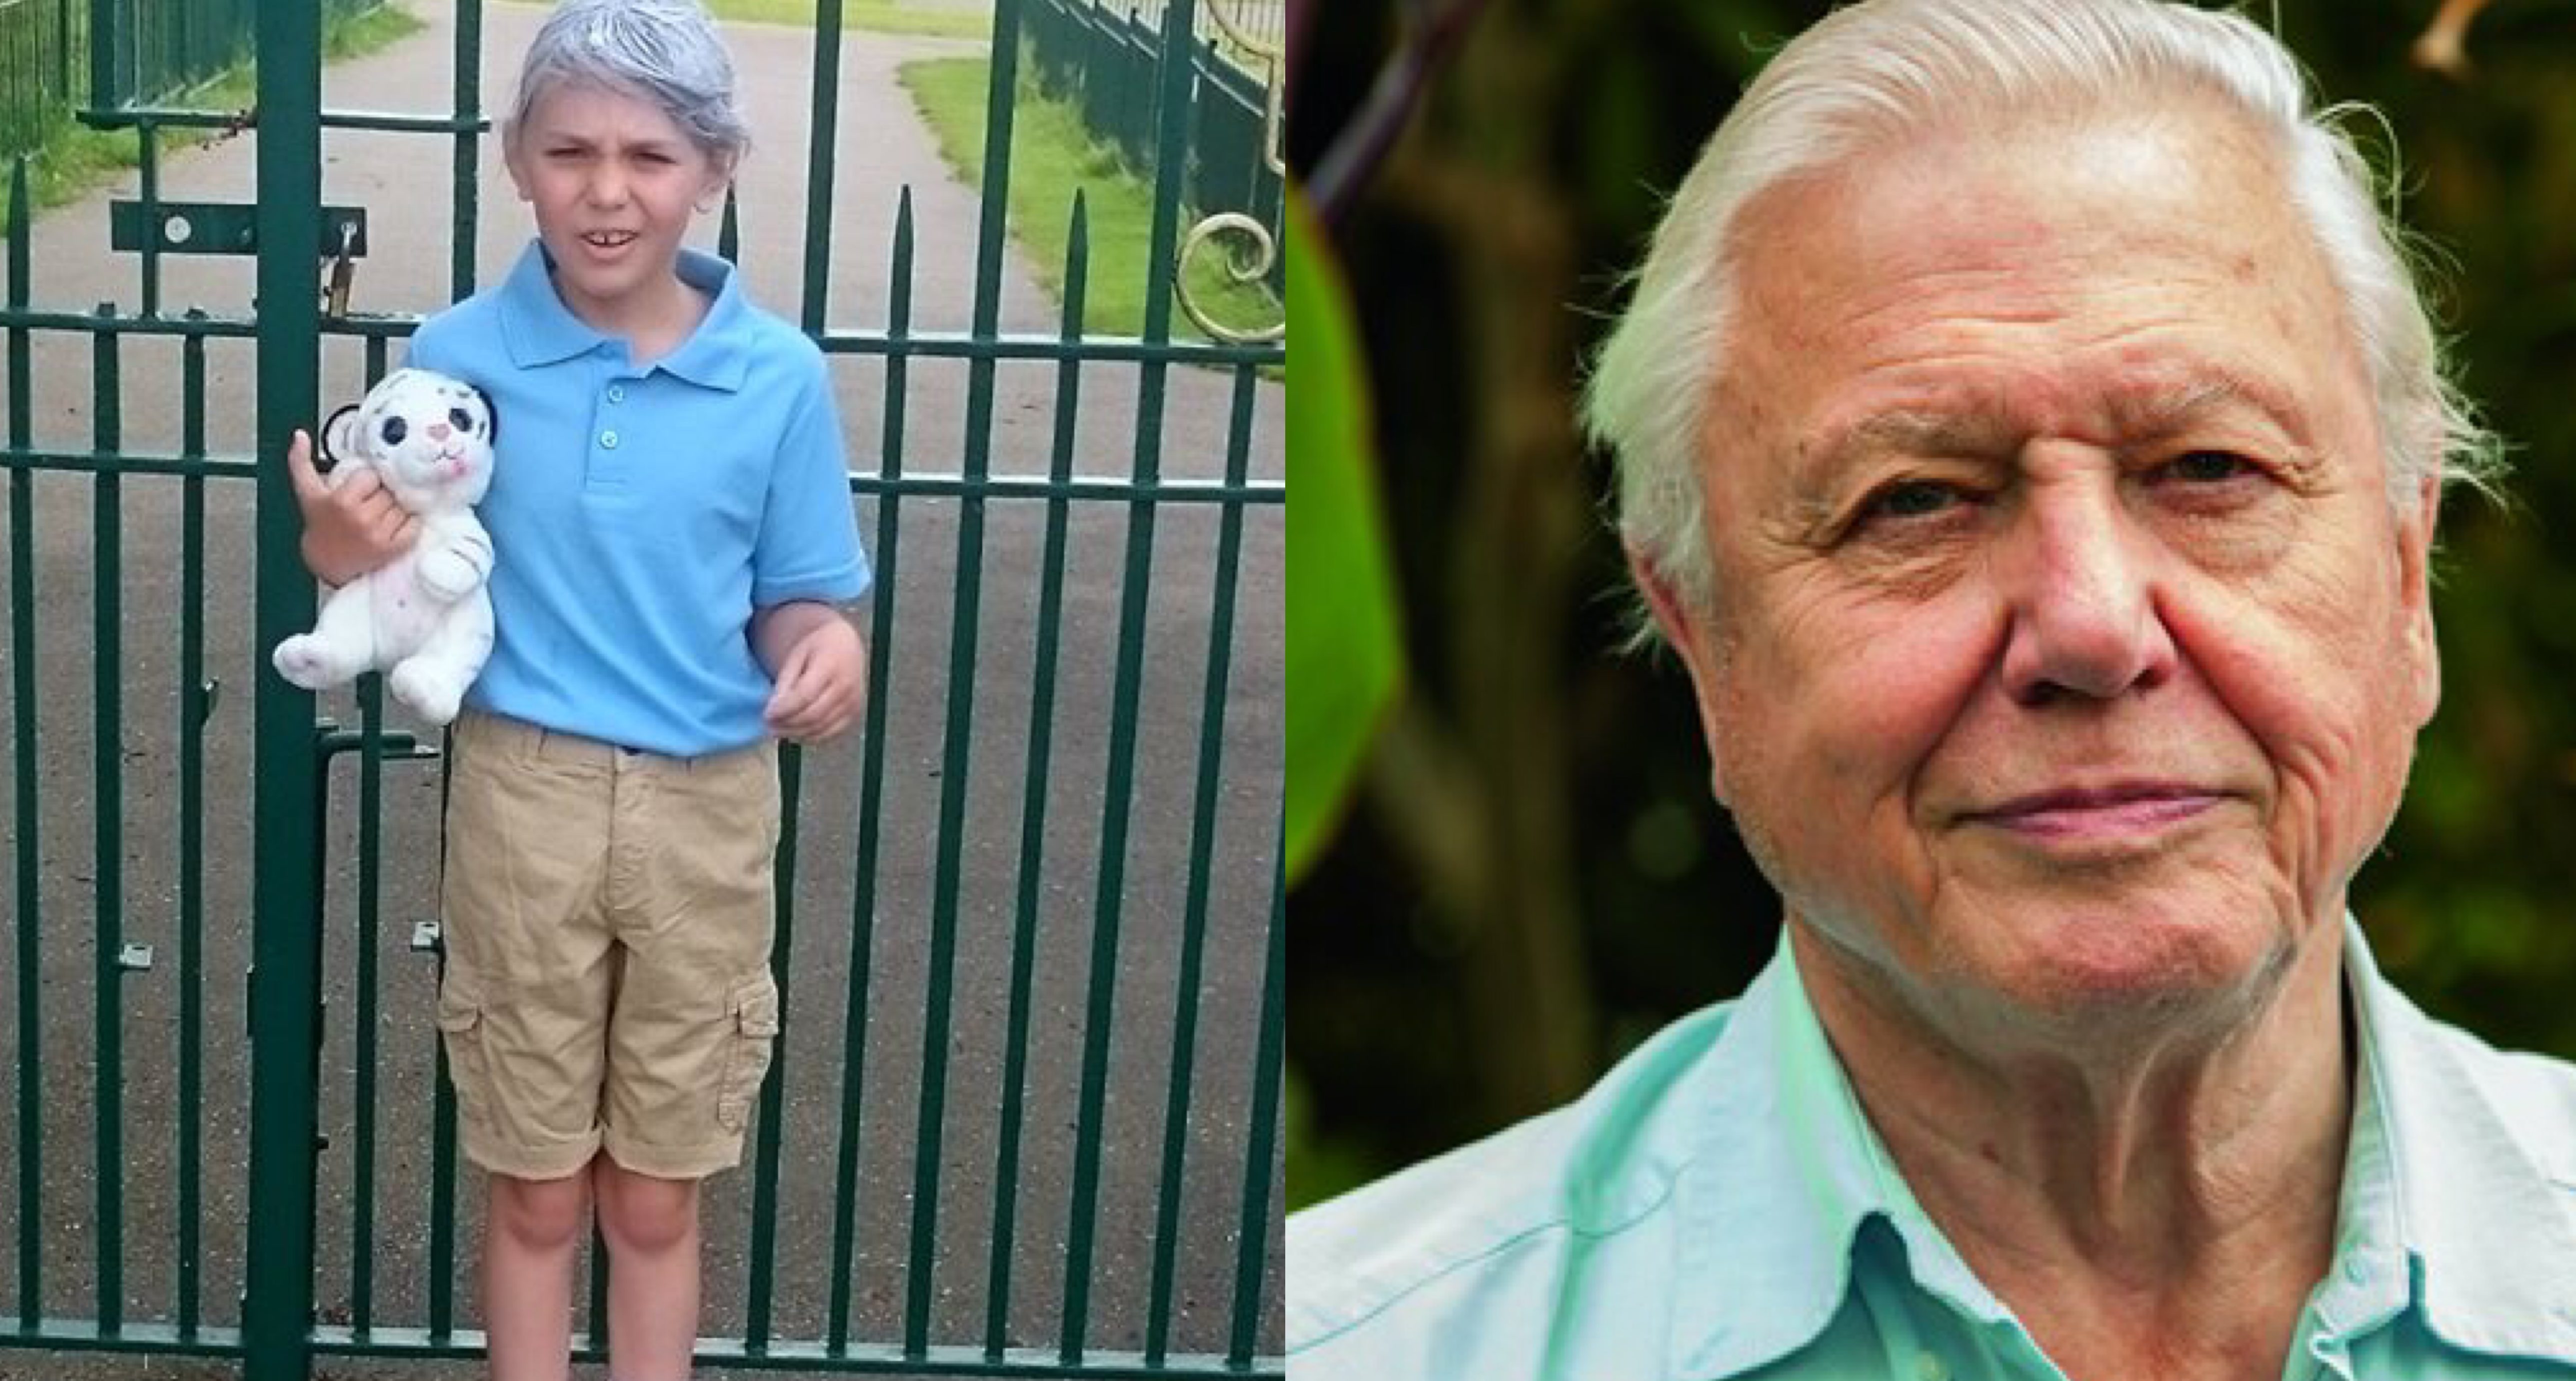 8-year-old girl goes to school dressed as David Attenborough, Sir David loves it